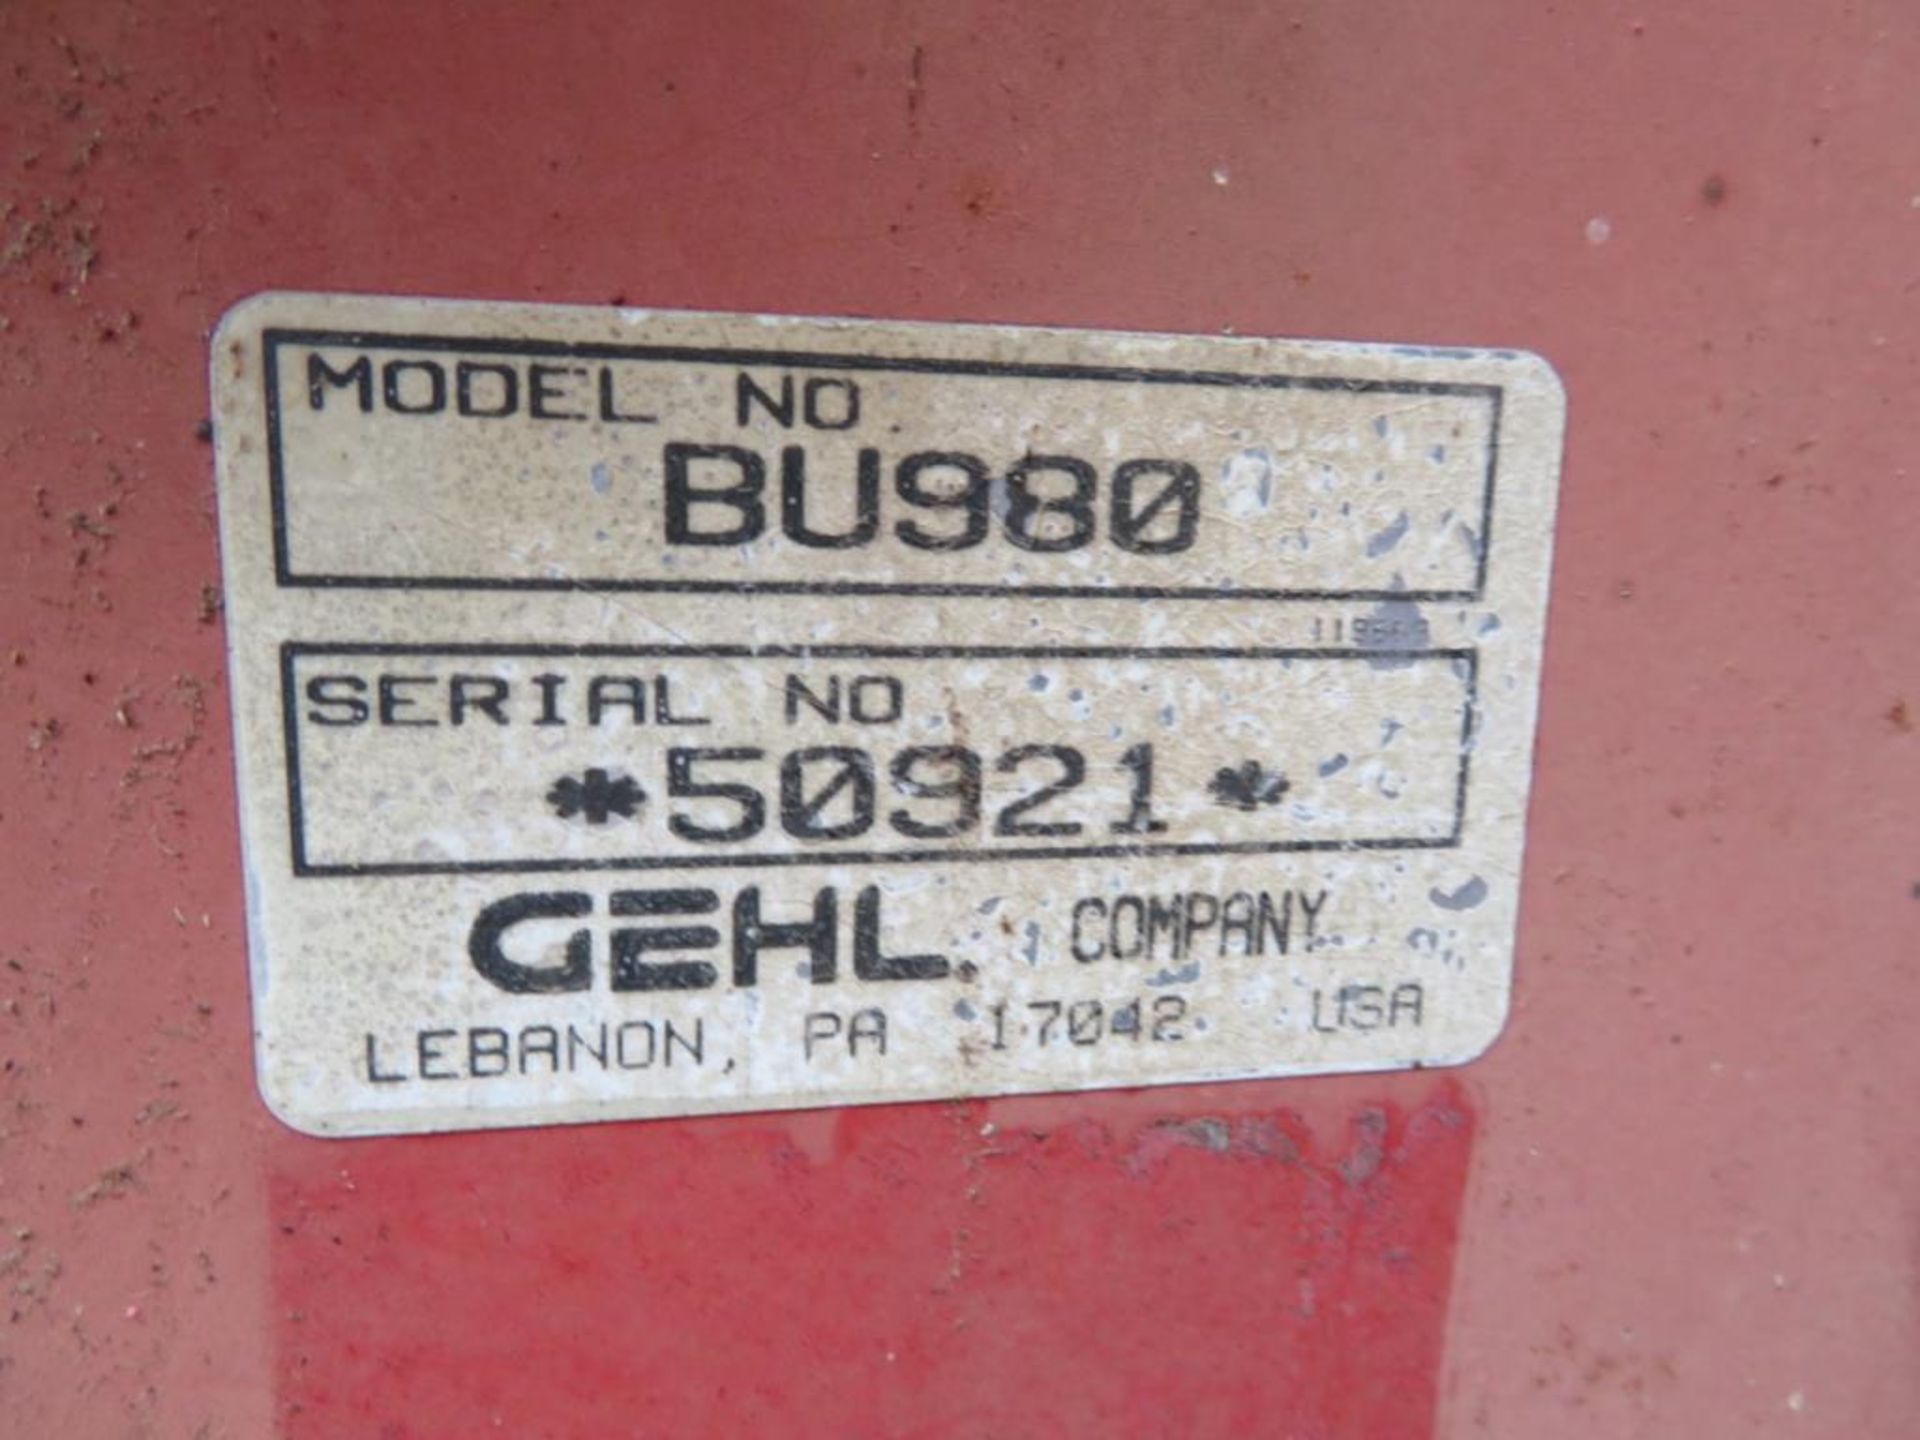 Gehl 980 tandem silage wagon, serial 50321 - Image 4 of 4